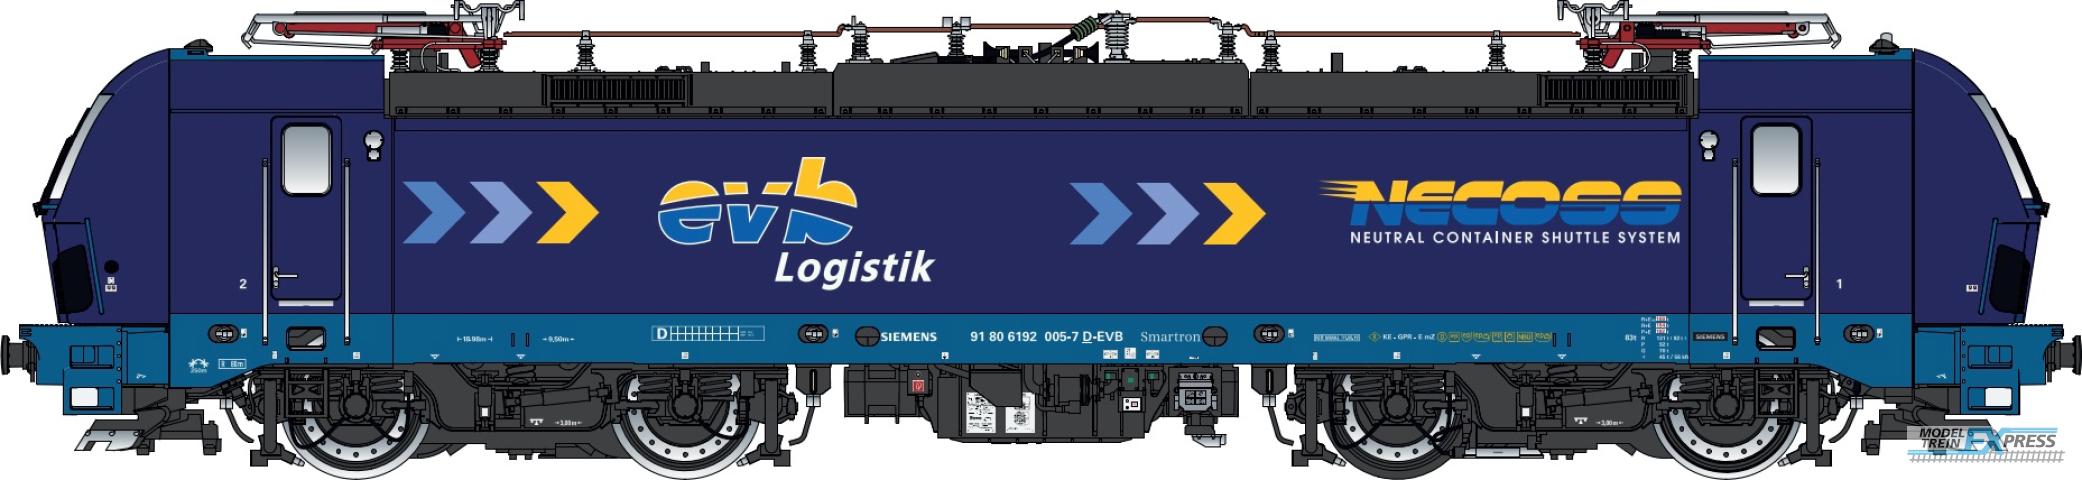 LS Models 16652 Smartron, Eisenbahnen und Verkehrsbetriebe Elbe-Weser (EVB Logistik)  /  Ep. VI  /  ---  /  HO  /  AC  /  1 P.